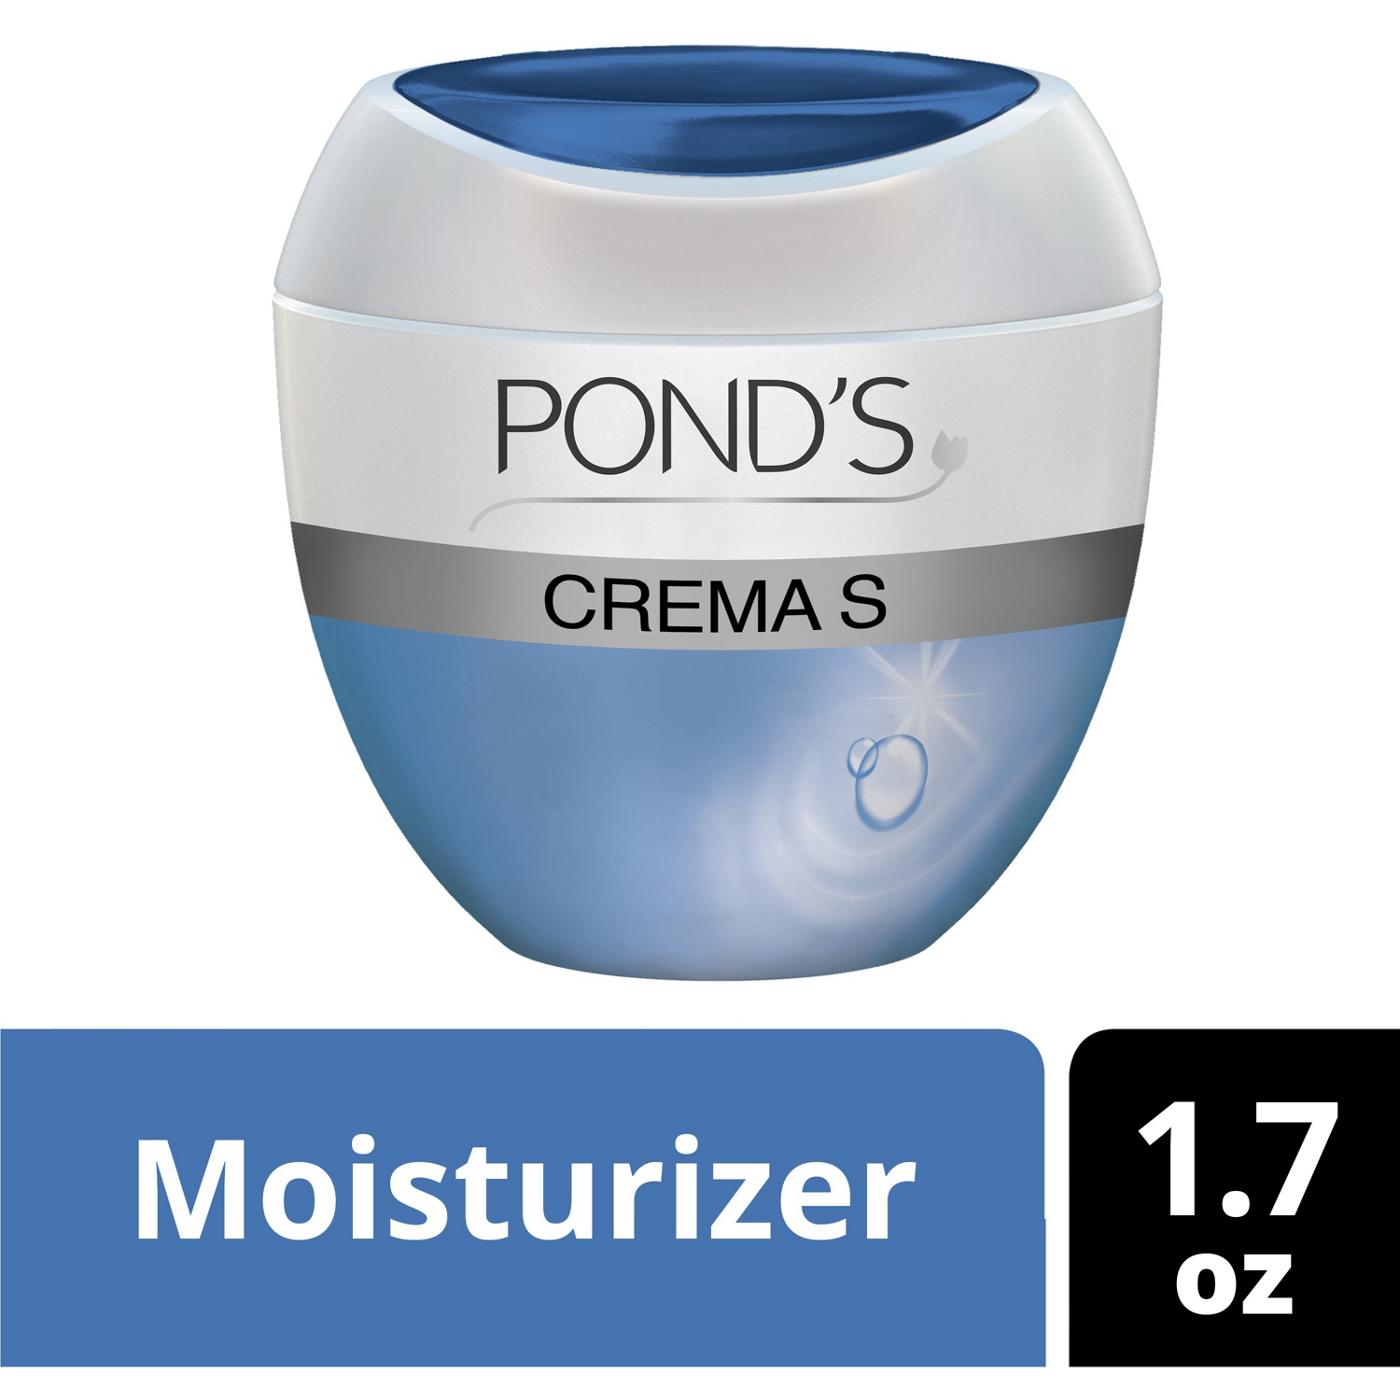 Pond's Crema S Nourishing Moisturizing Cream; image 4 of 4